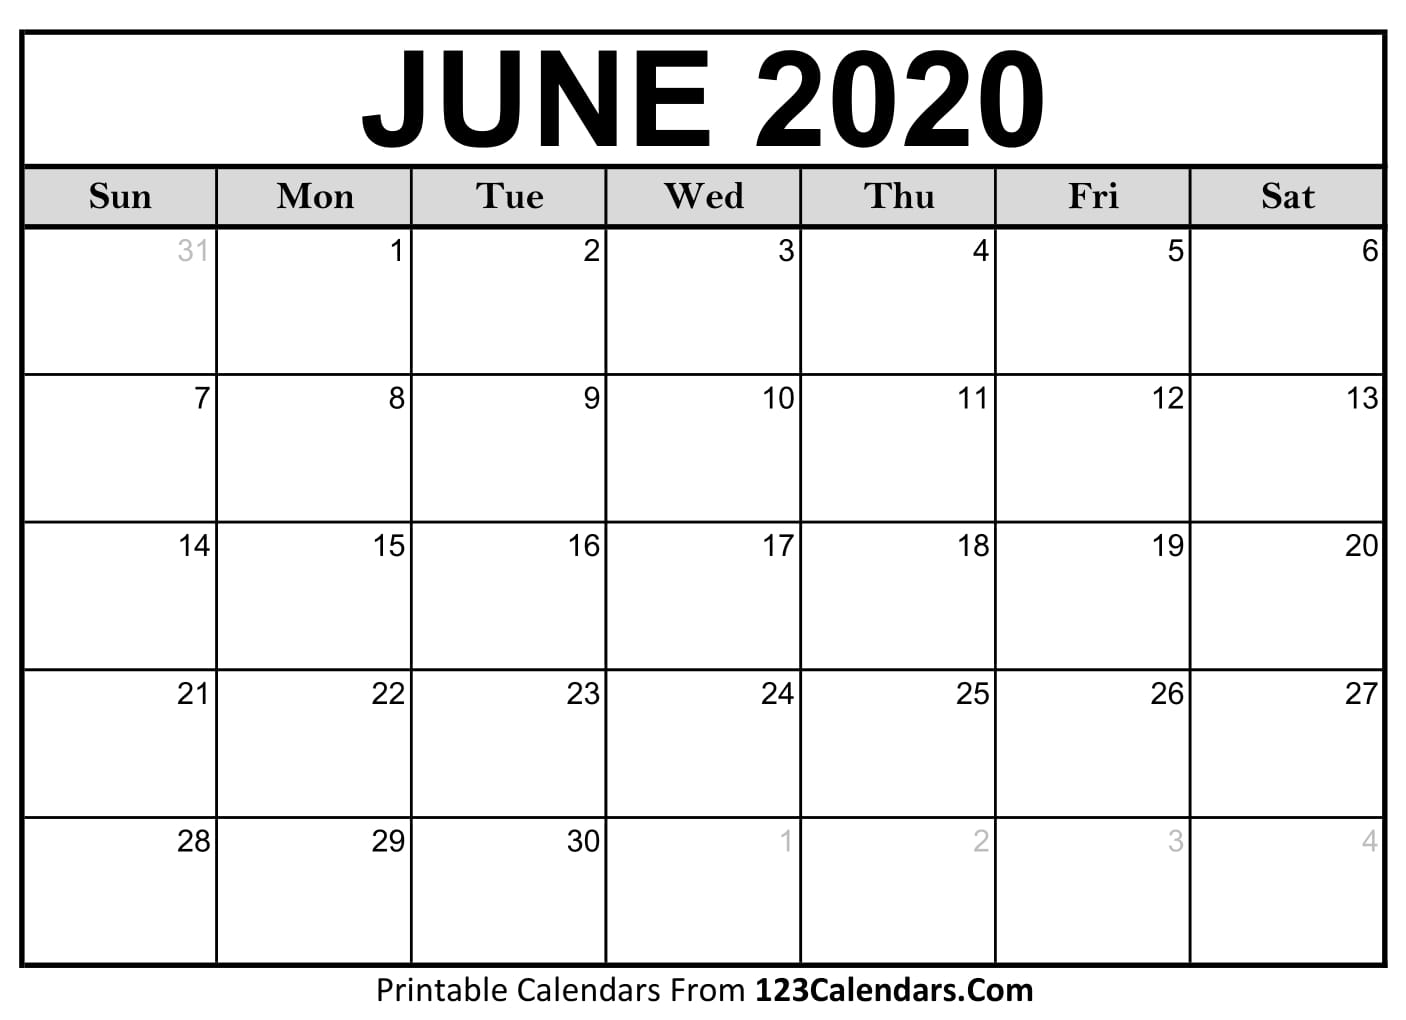 Free June 2020 Calendar 123Calendars